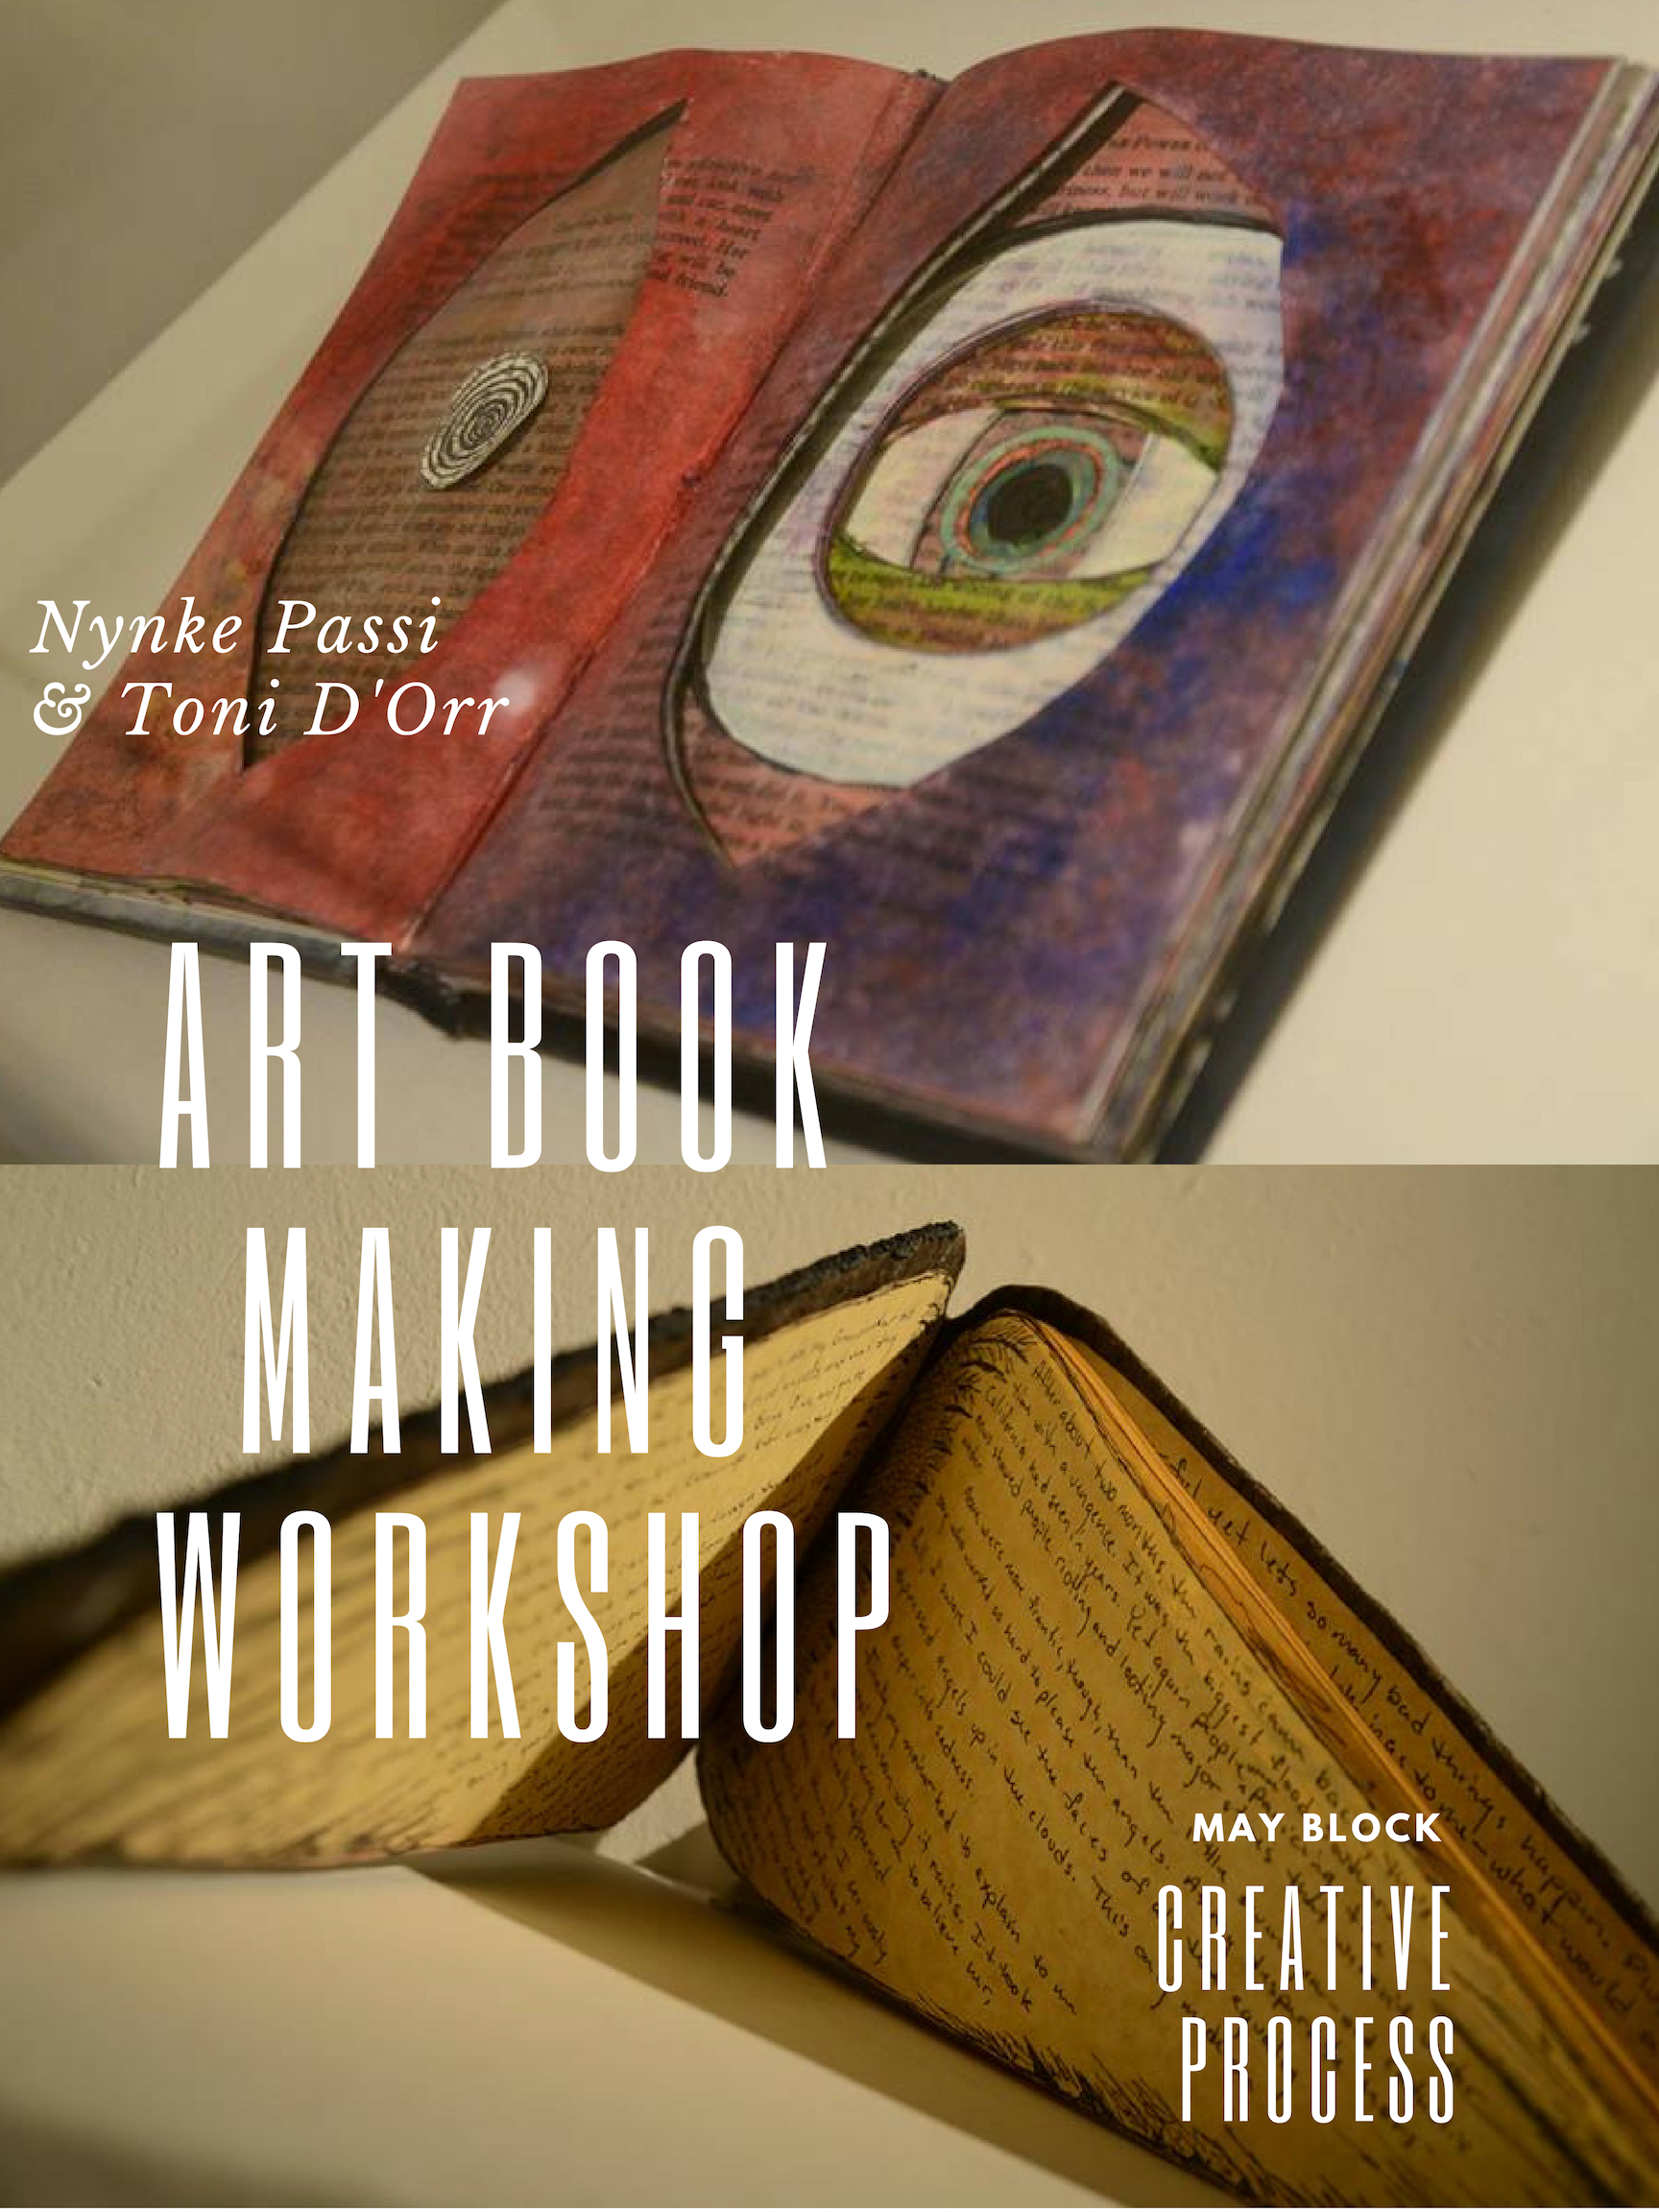 Art Book Making Workshop.jpg